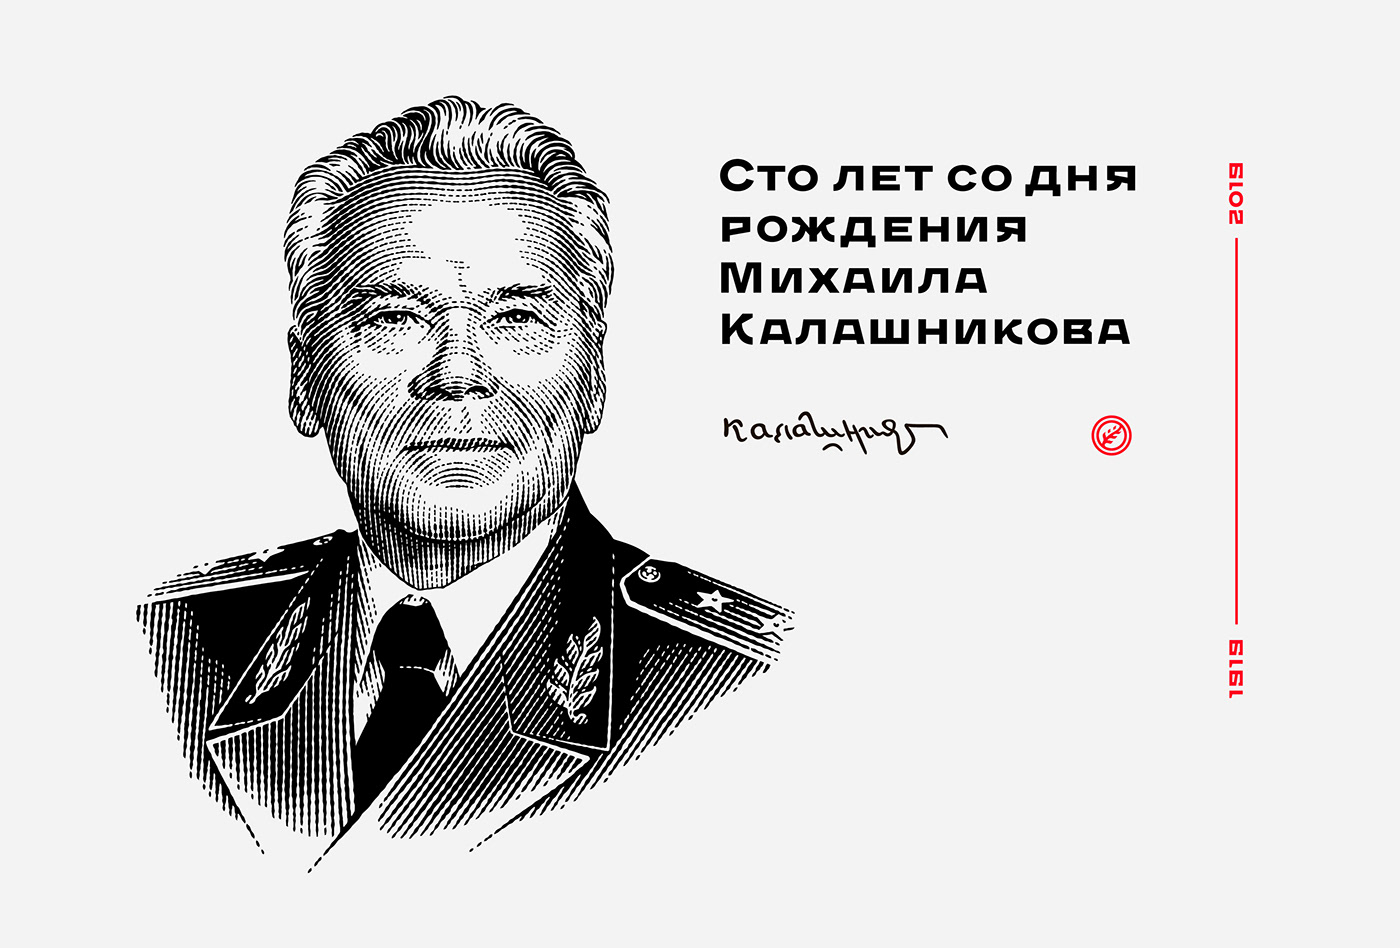 anniversary engraving Event identity industrial Kalashnikov logo mark outline Russia